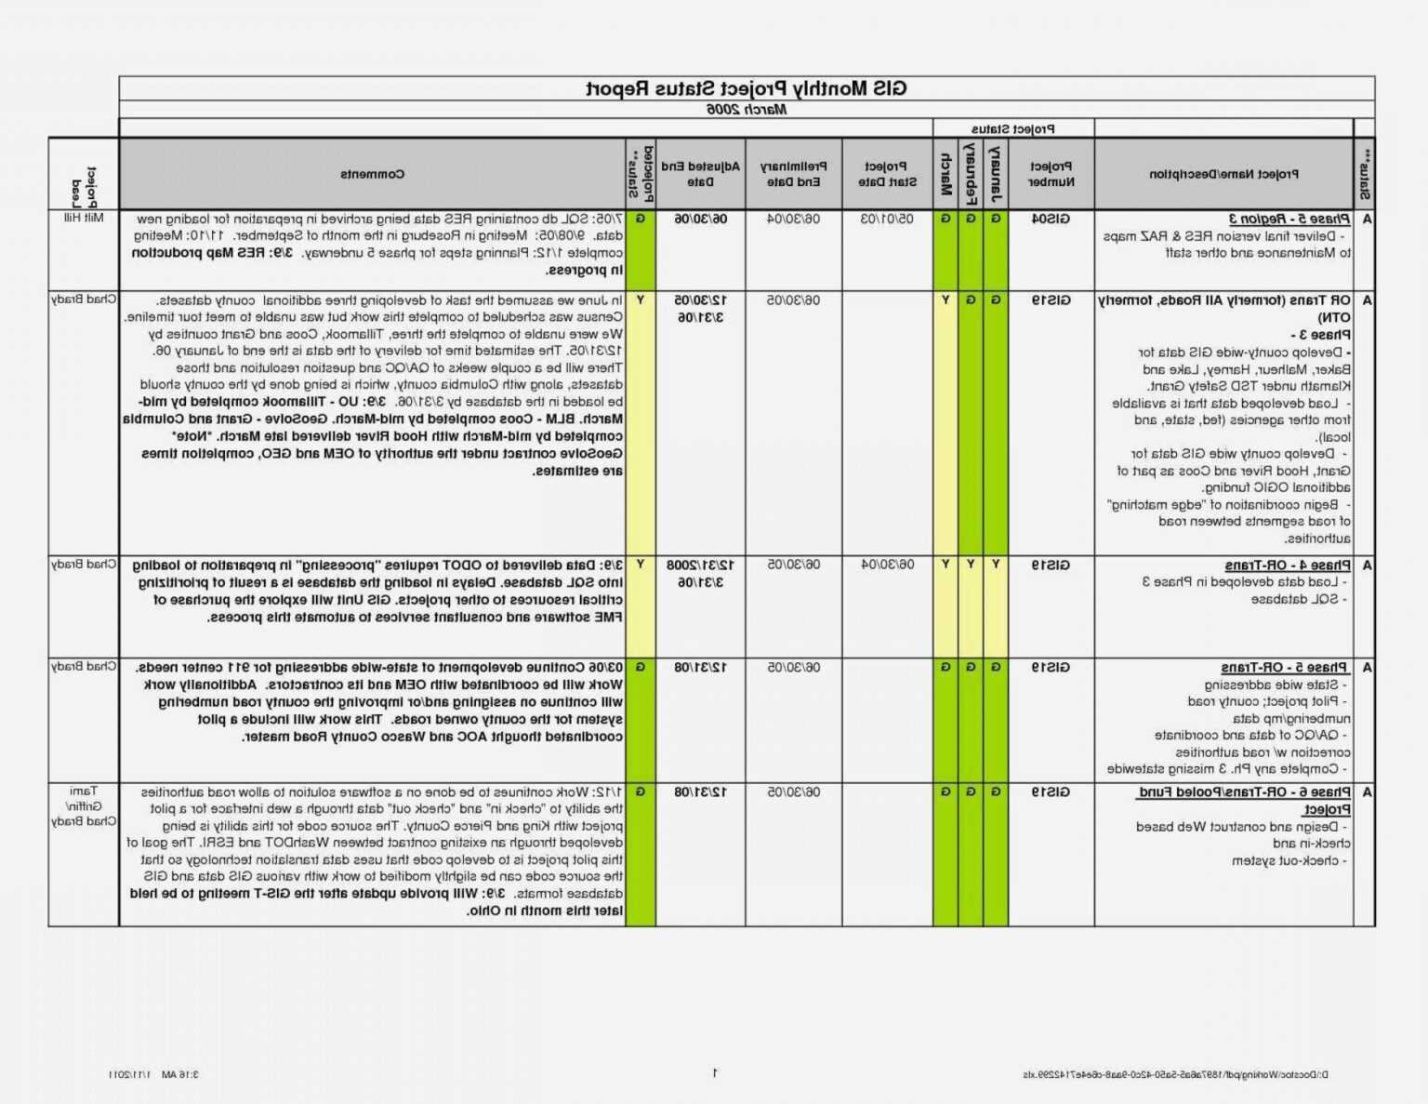 Costum Project Management Project Status Report Template Pdf